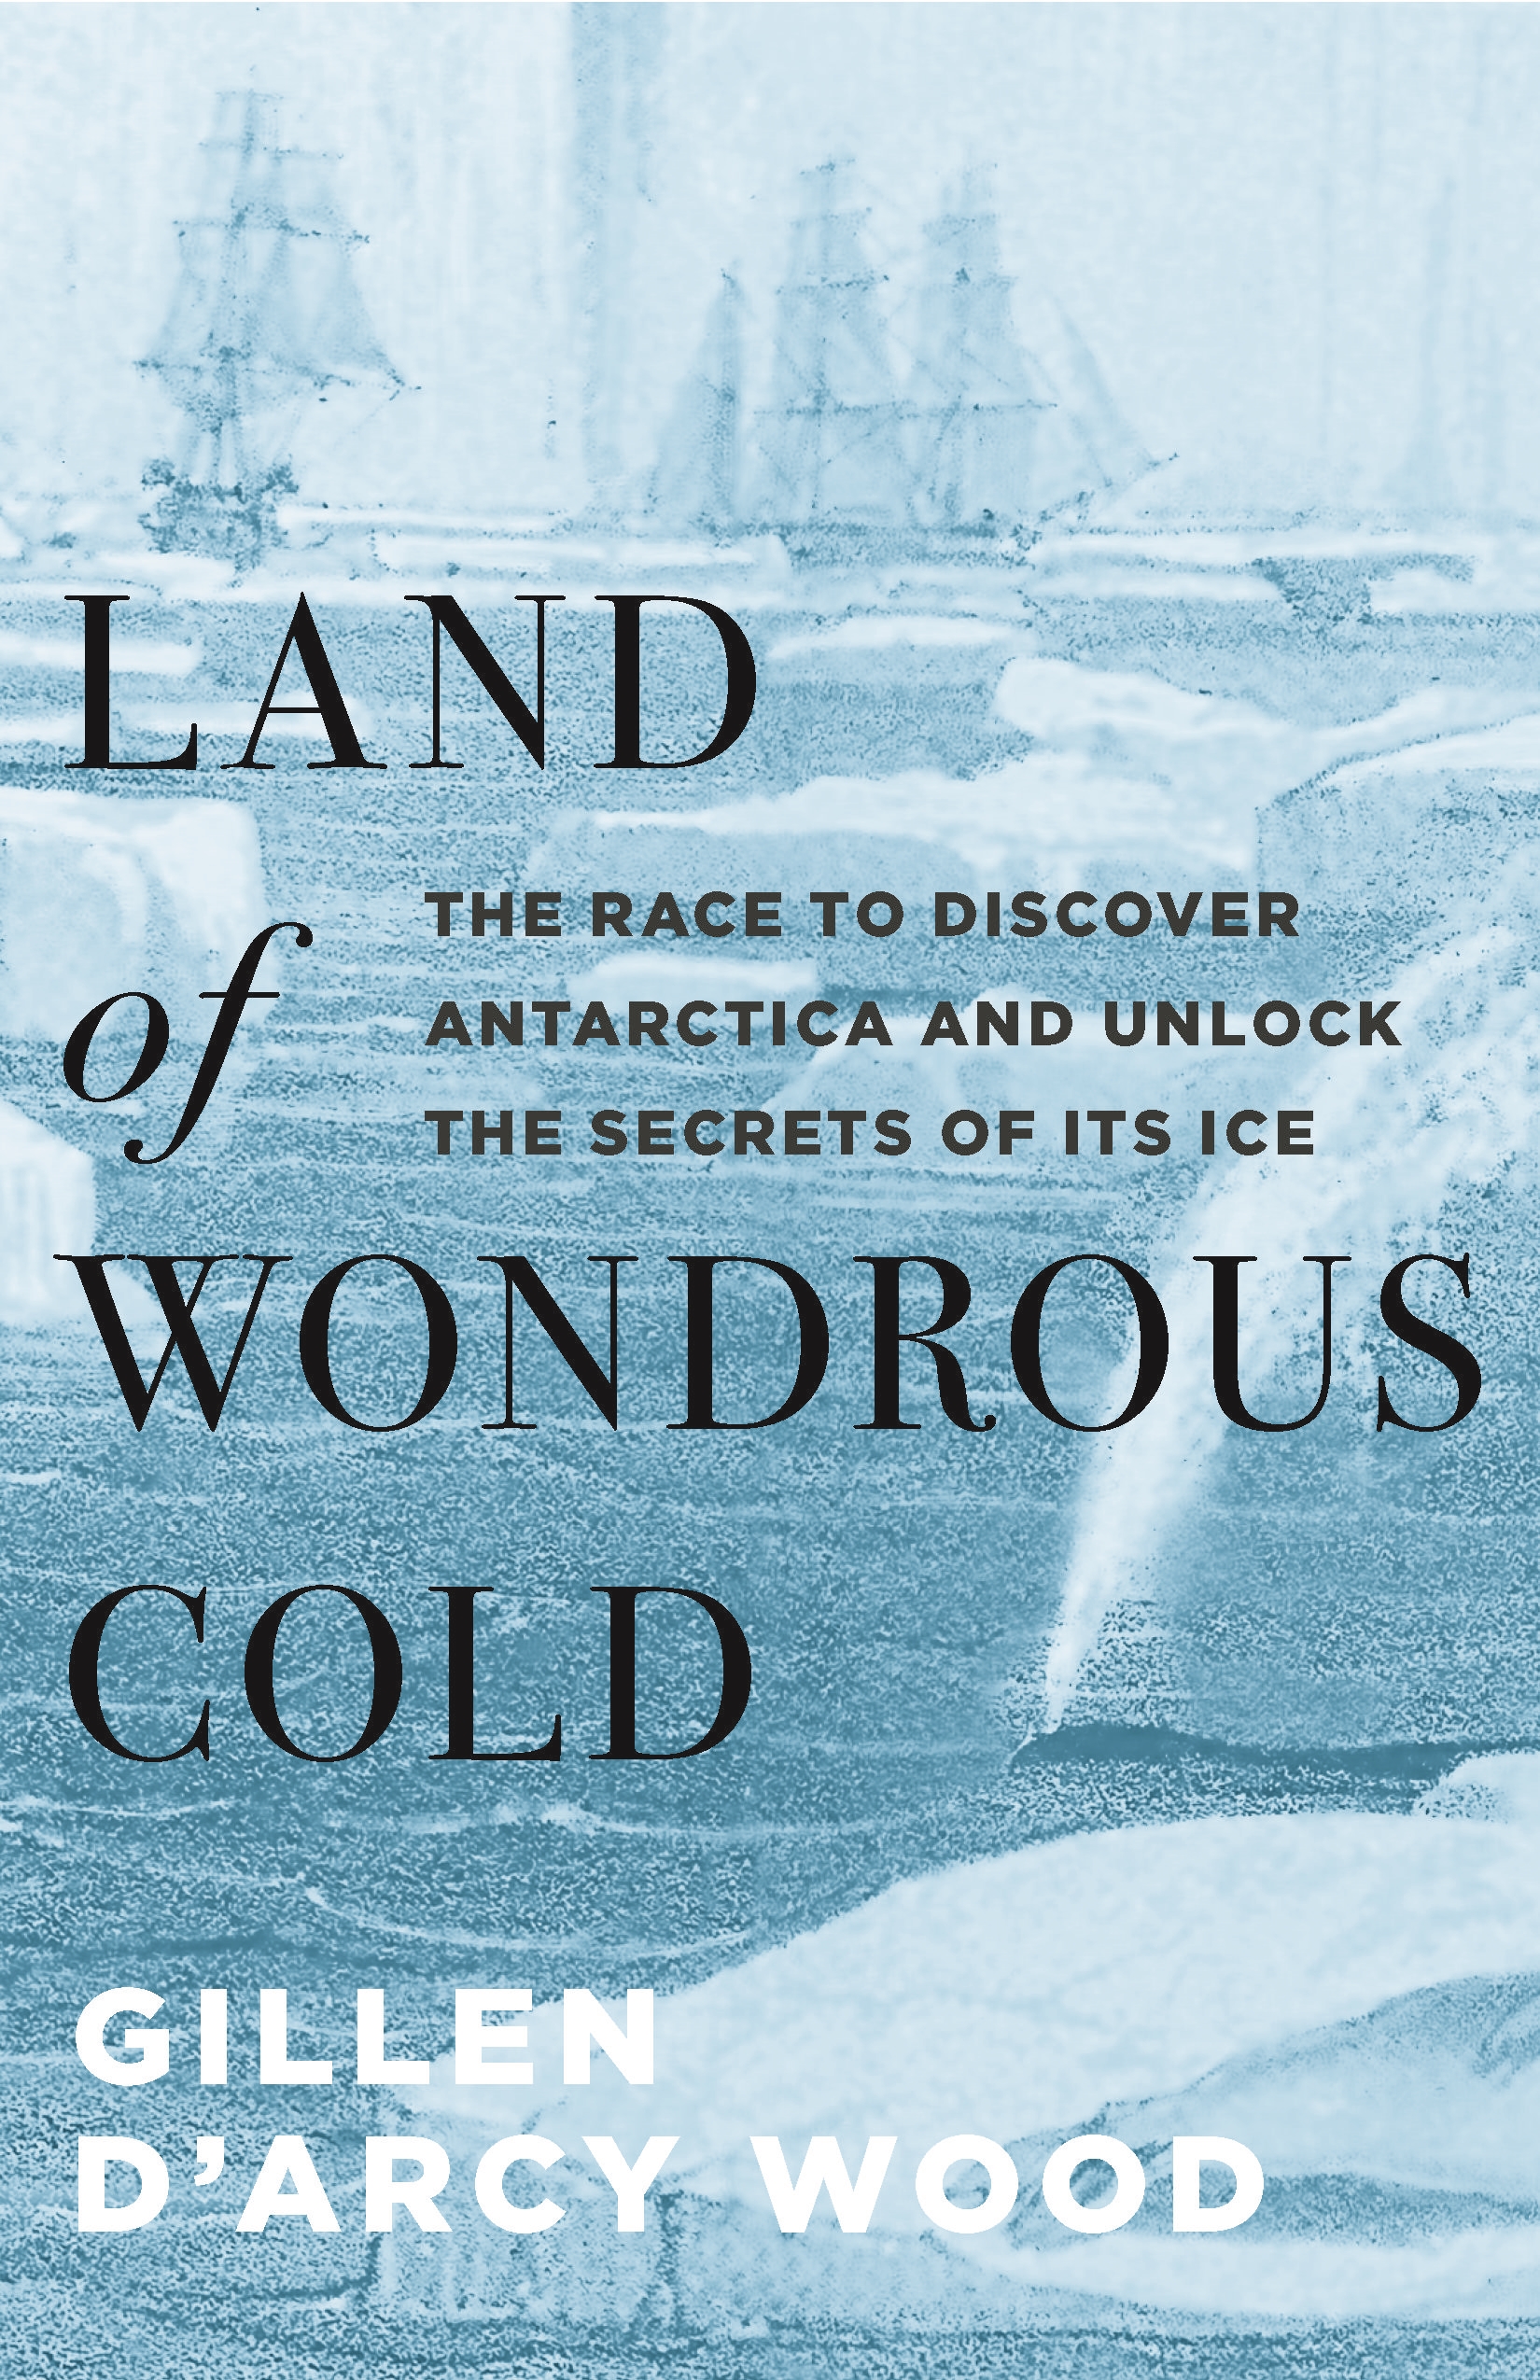 Land of Wondrous Cold  Princeton University Press